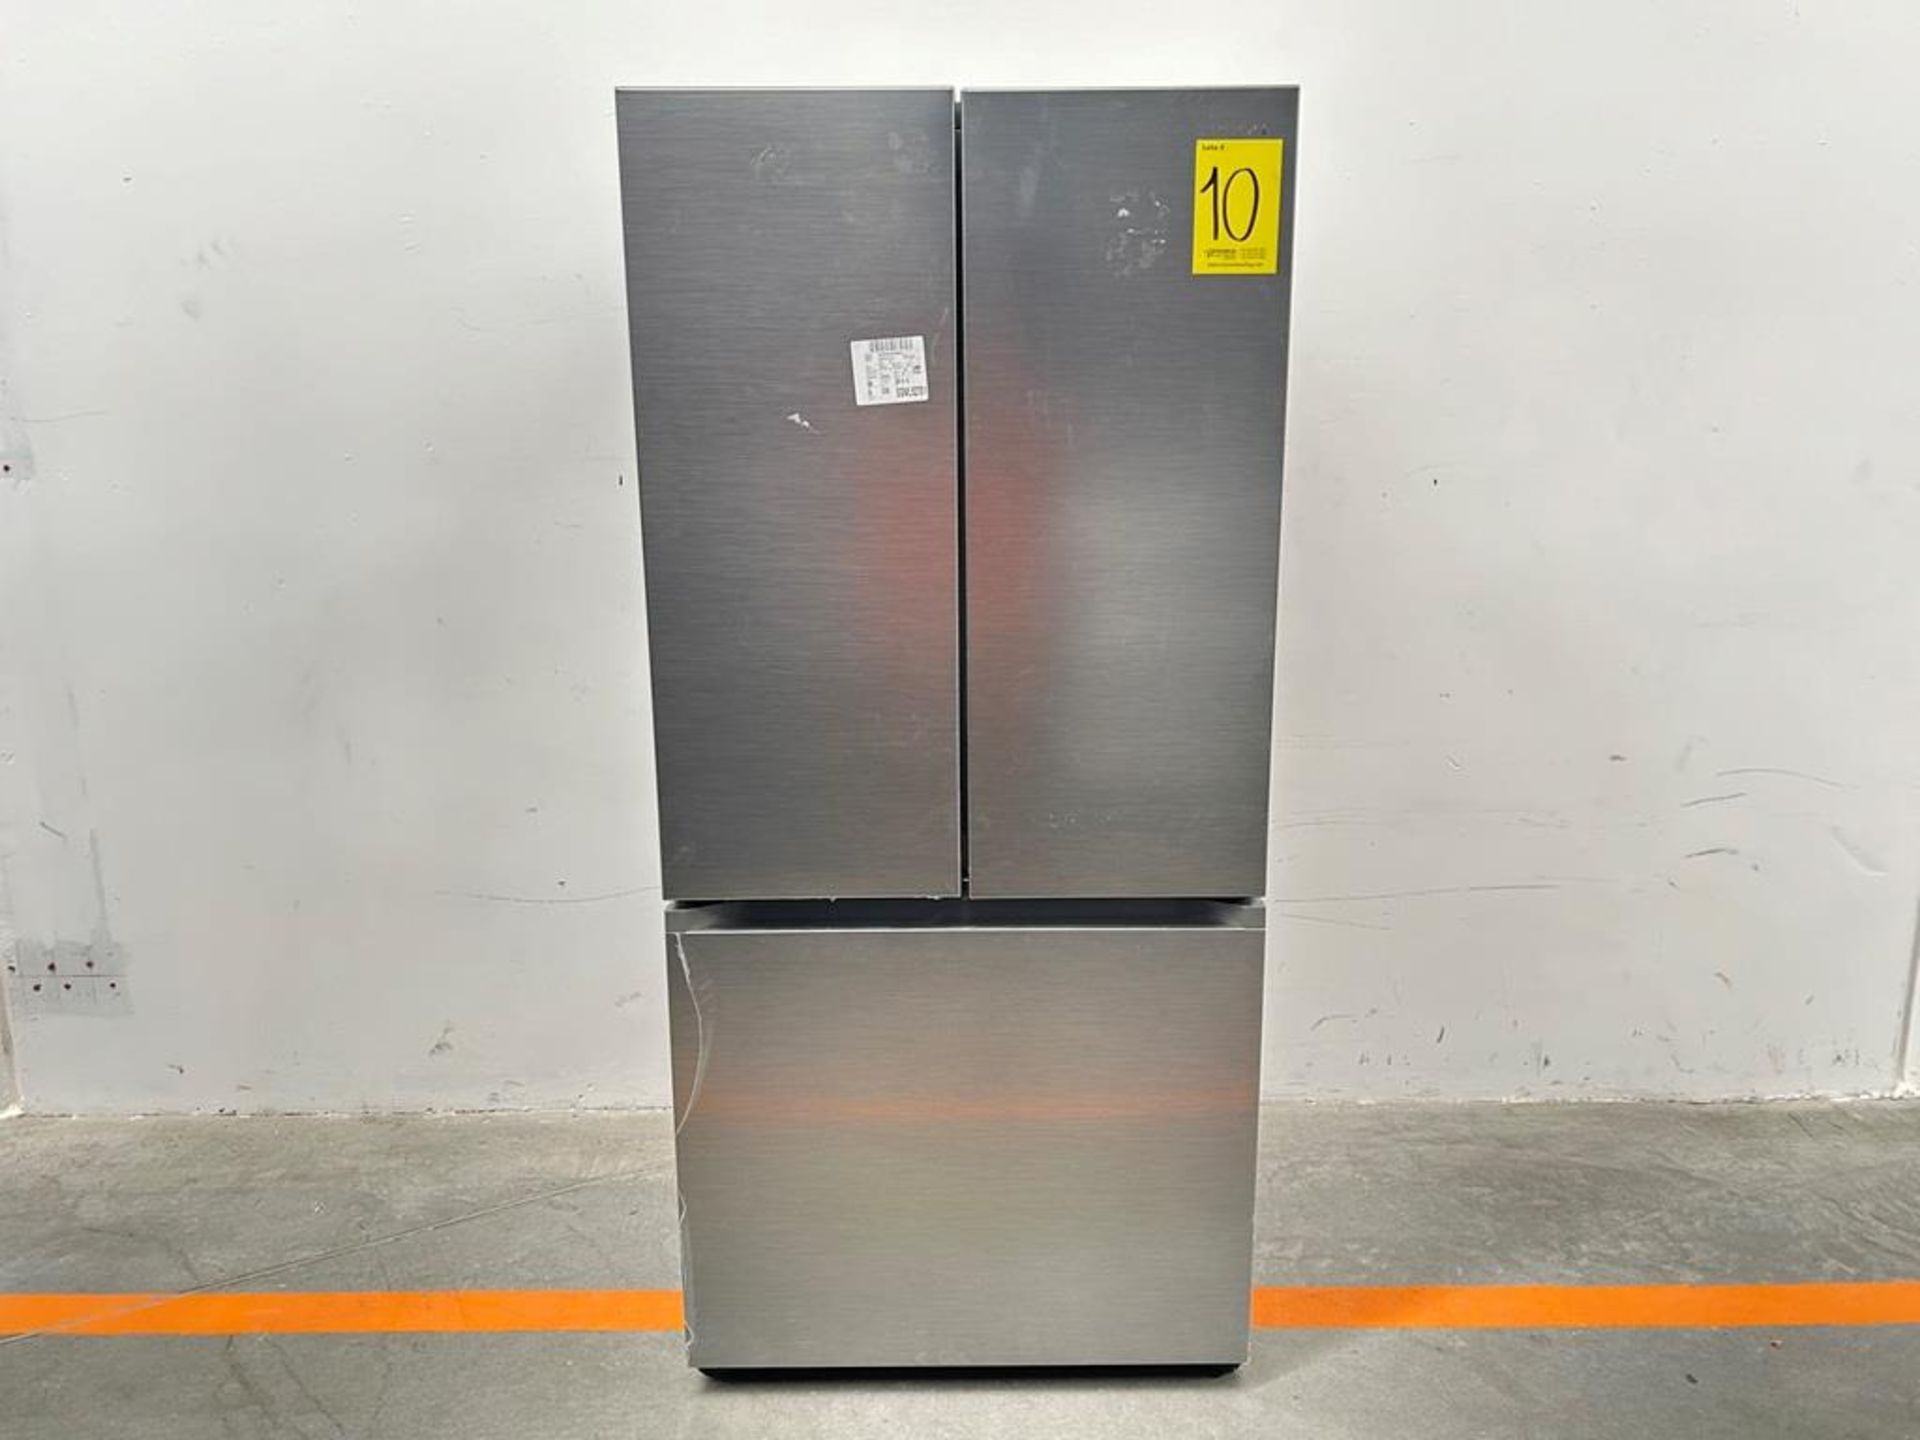 (NUEVO) Refrigerador Marca SAMSUNG, Modelo RF25C5151S9, Serie 00004F, Color GRIS